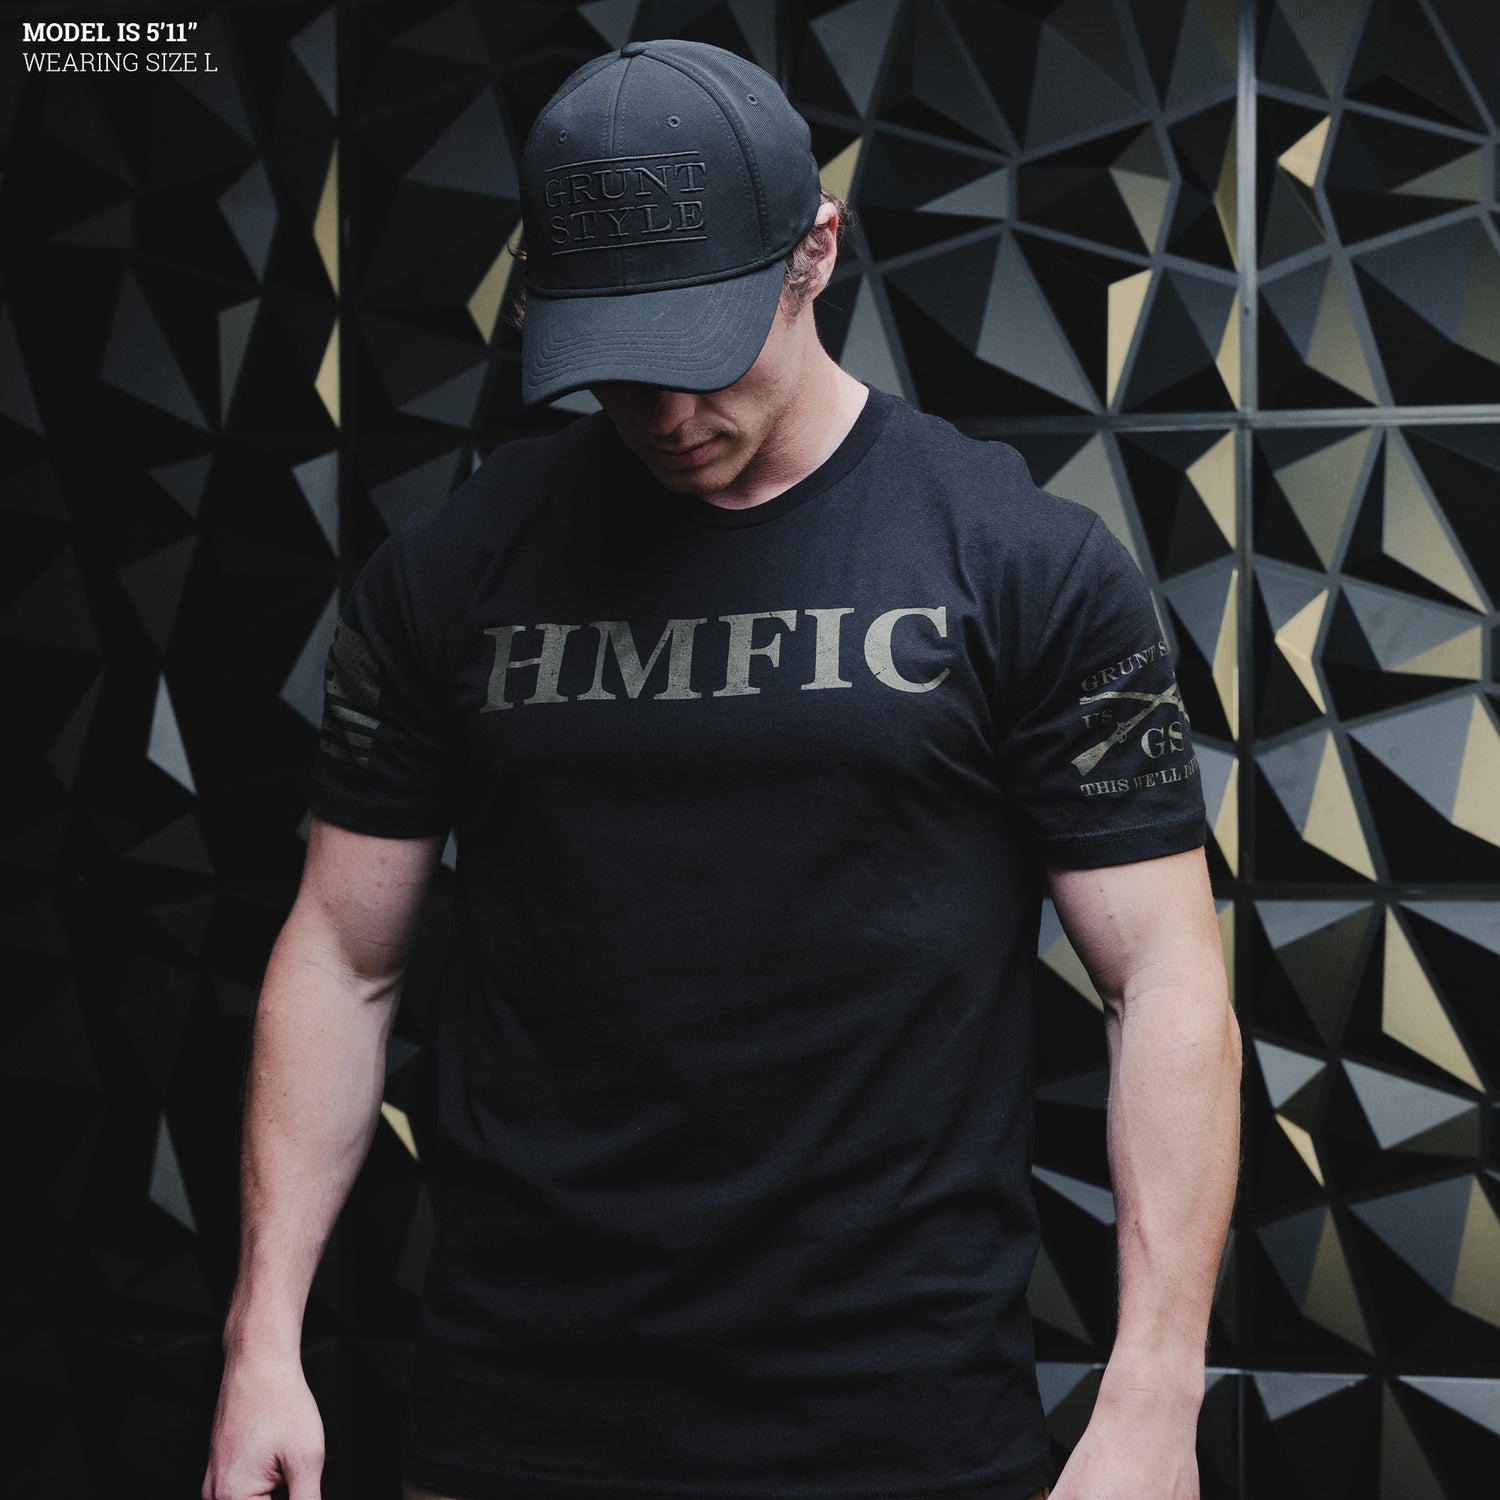 Military clothing - HMFIC 